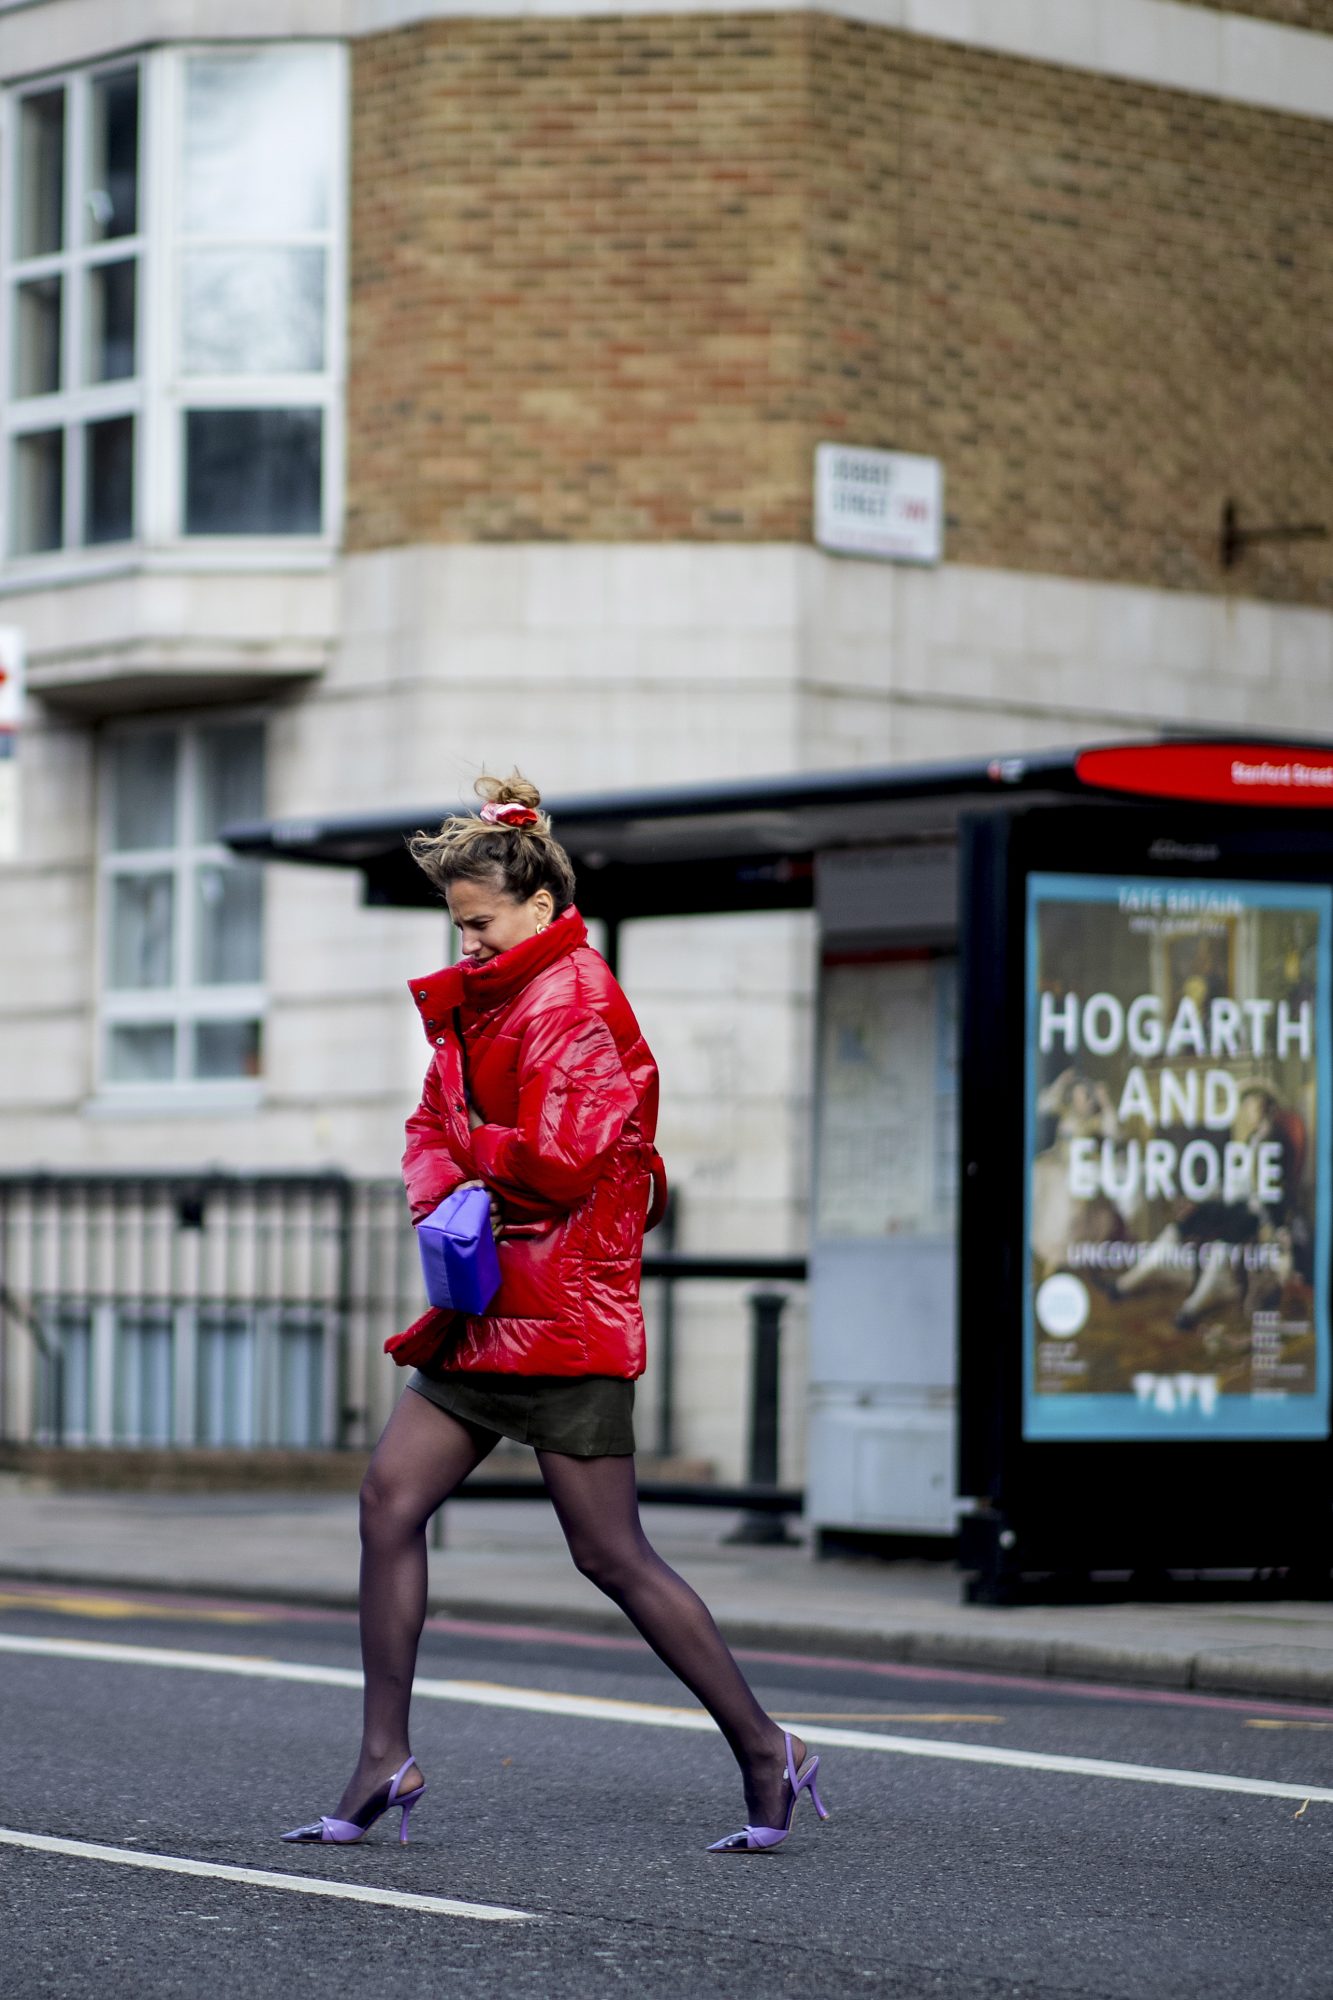 london fashion week